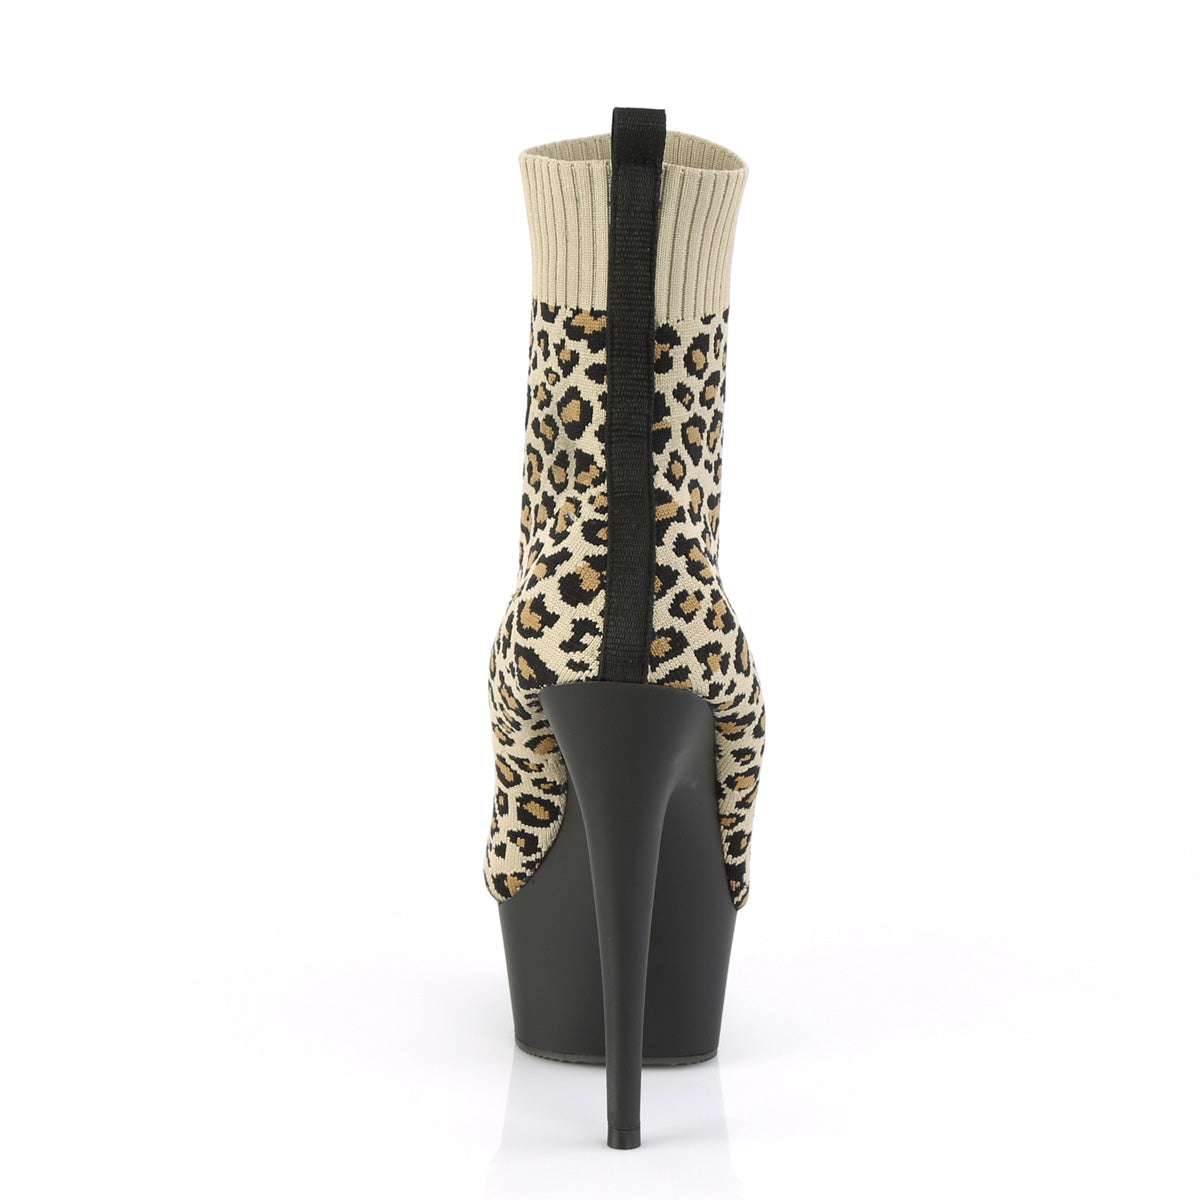 DELIGHT-1002LP 6" Heel Tan Leopard Print Pole Dancer Shoes-Pleaser- Sexy Shoes Fetish Footwear